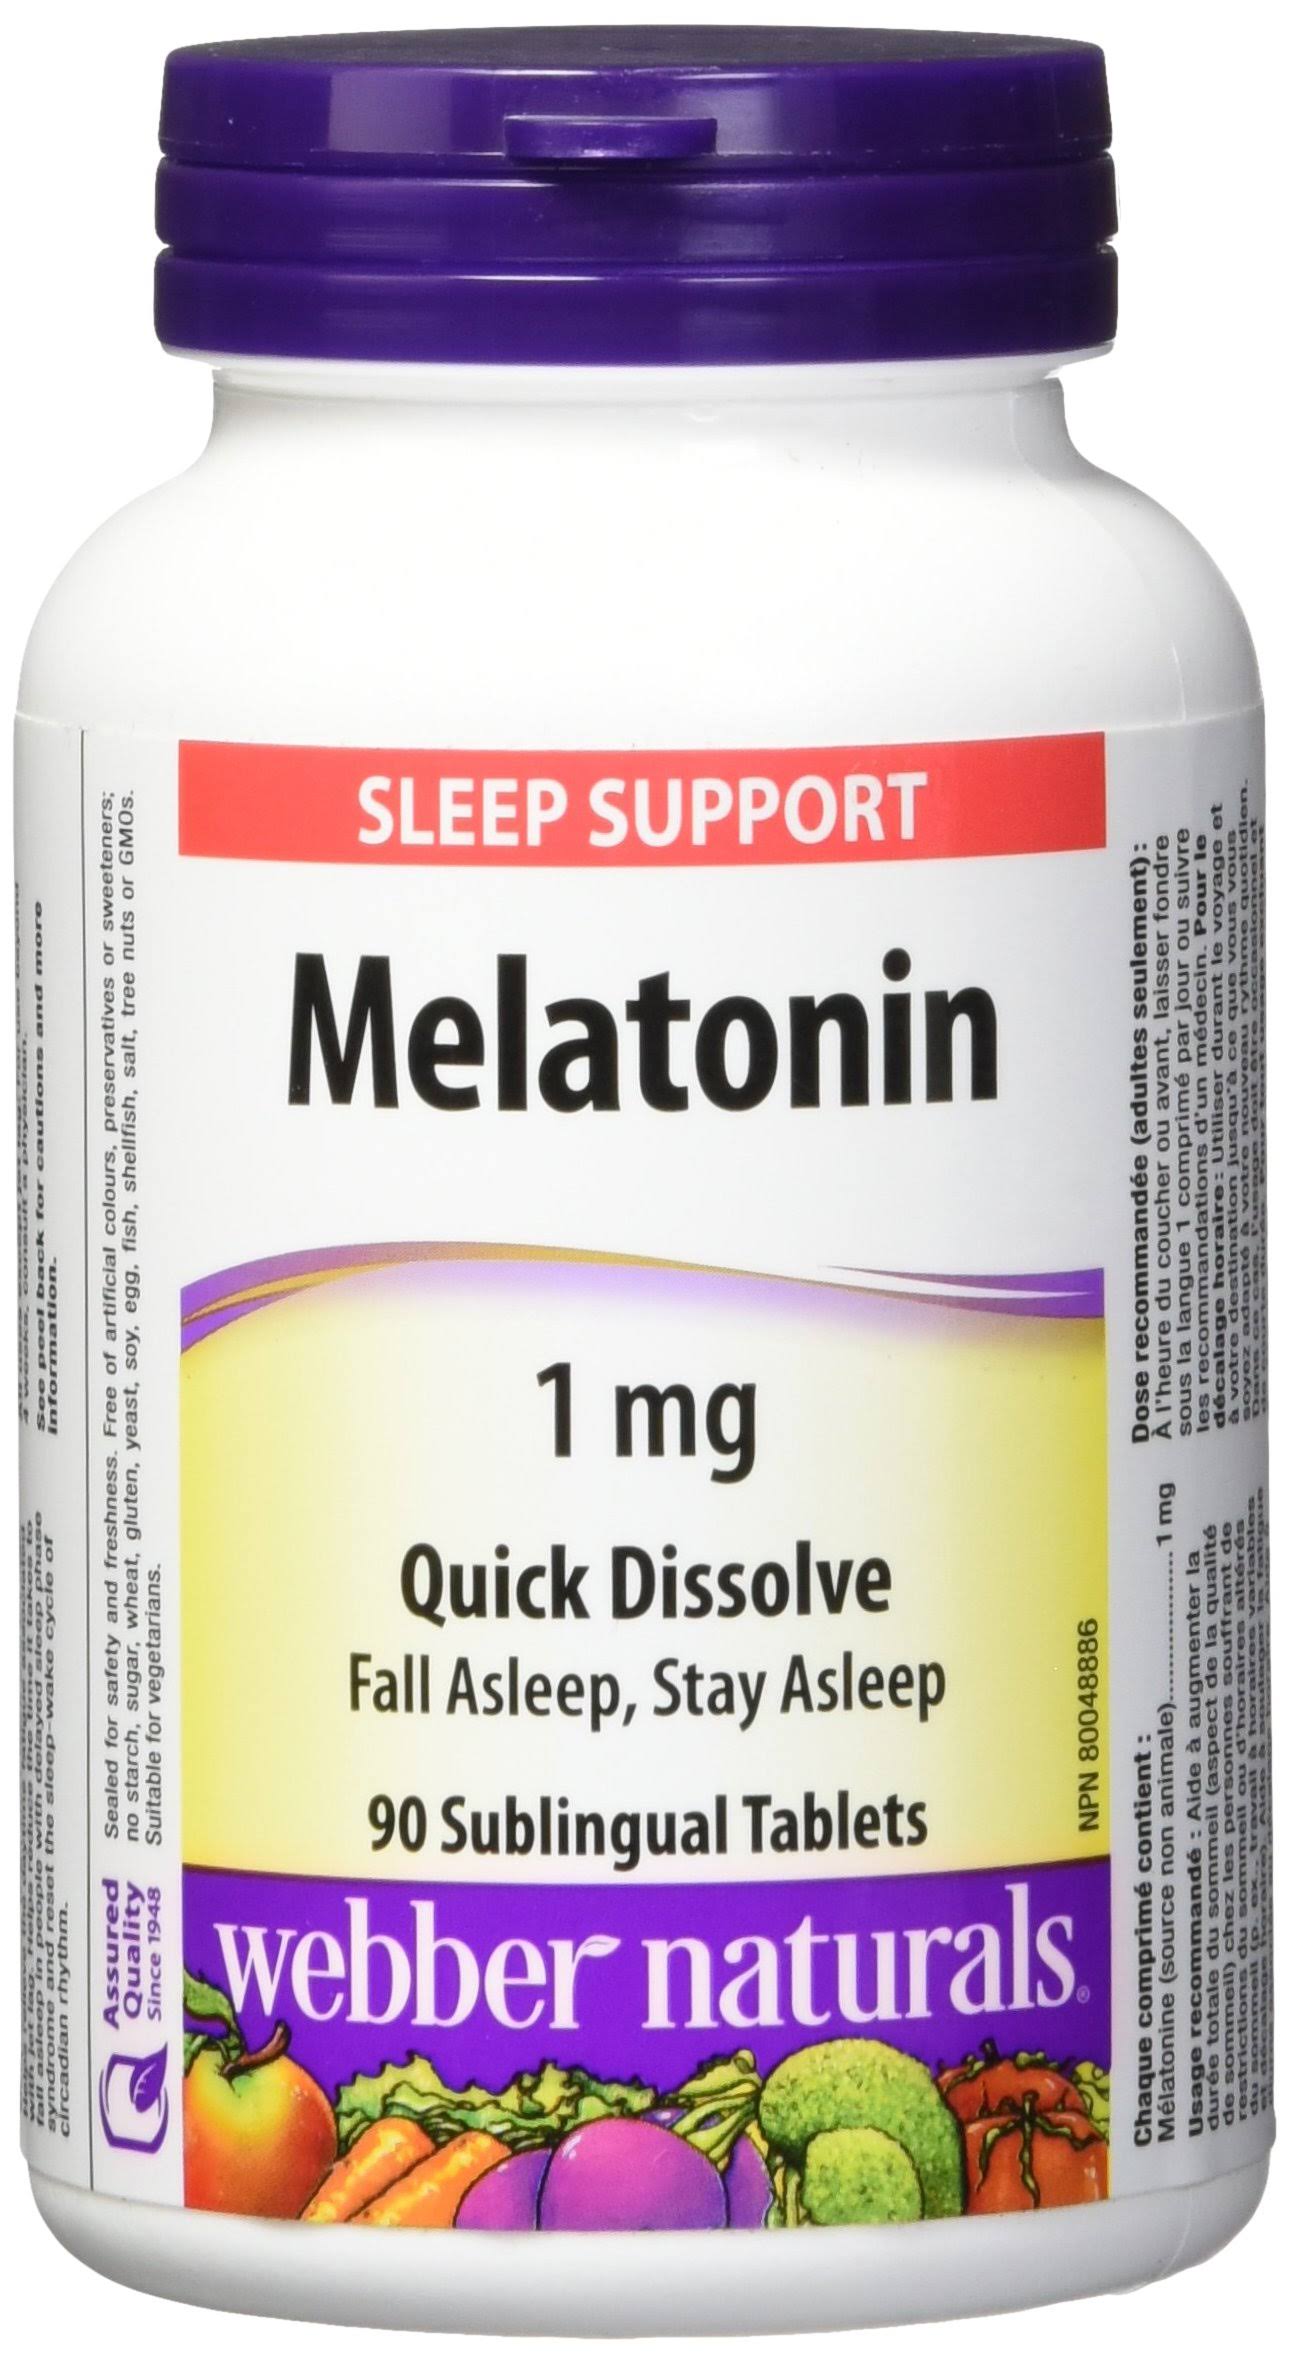 Webber Naturals Melatonin Quick Dissolve Sleep Support Tablets - 90ct, 1mg